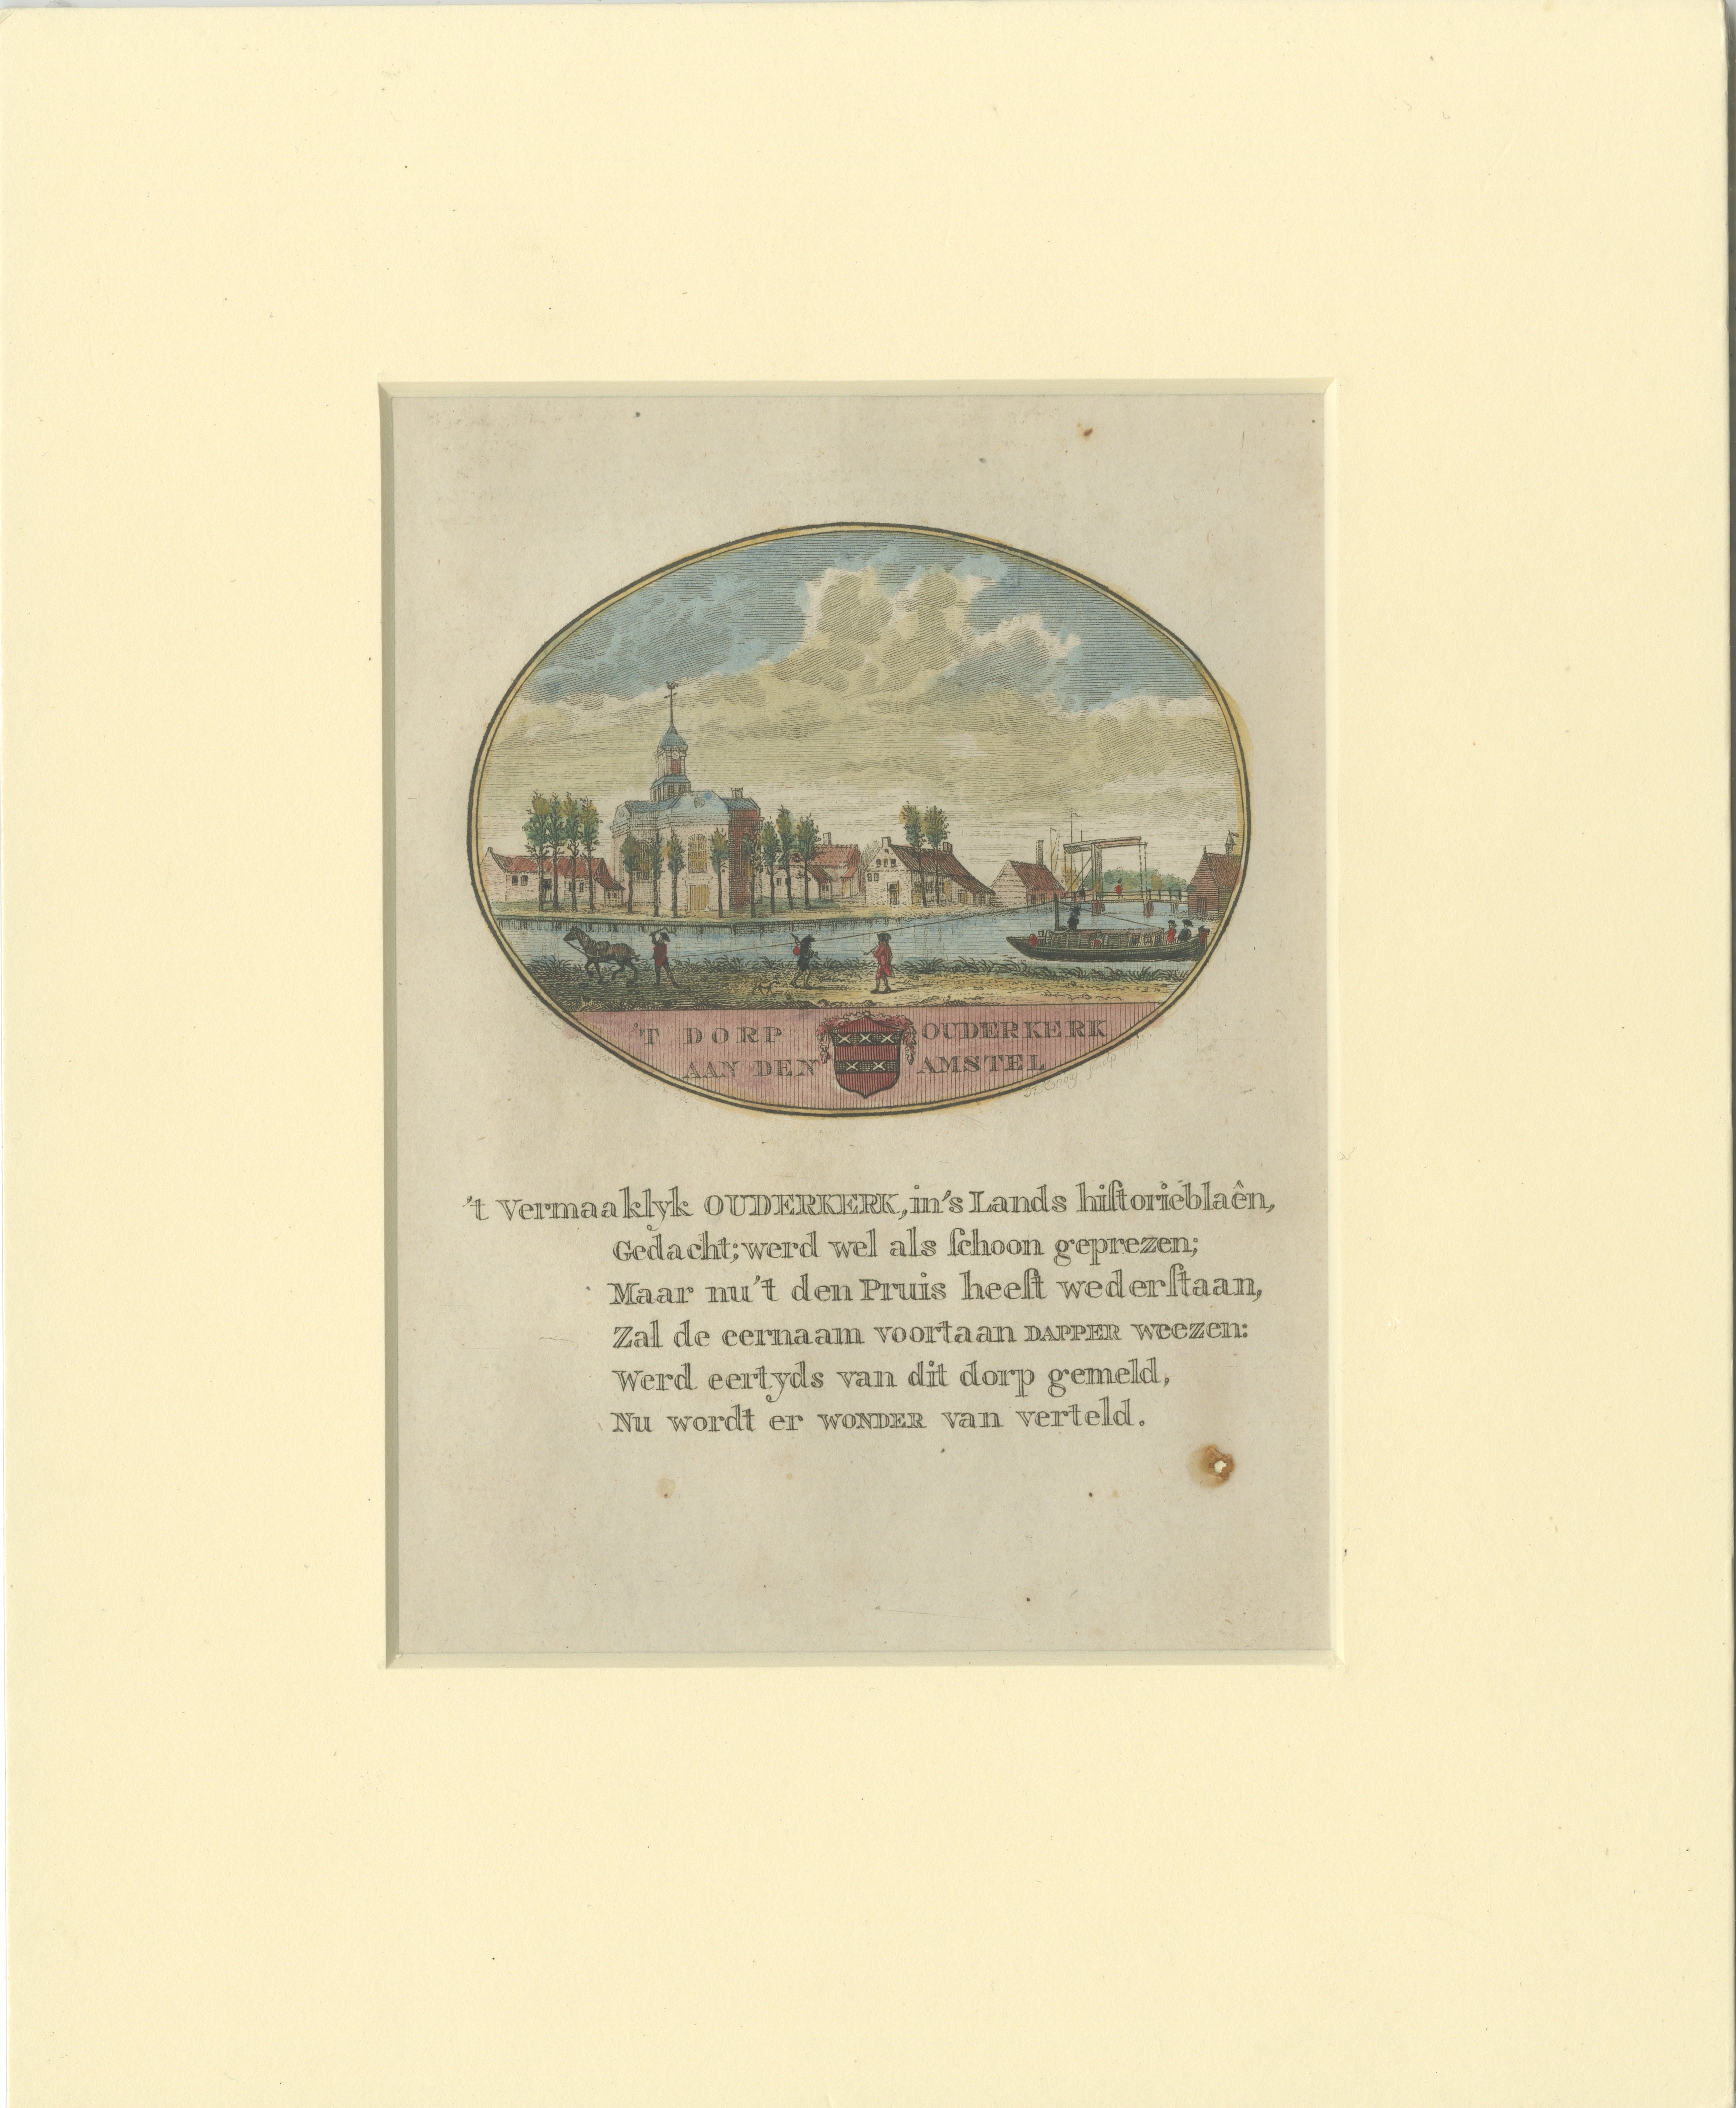 Impression ancienne de la ville d'Audenkerk aan de Amstel, Hollande, 1795